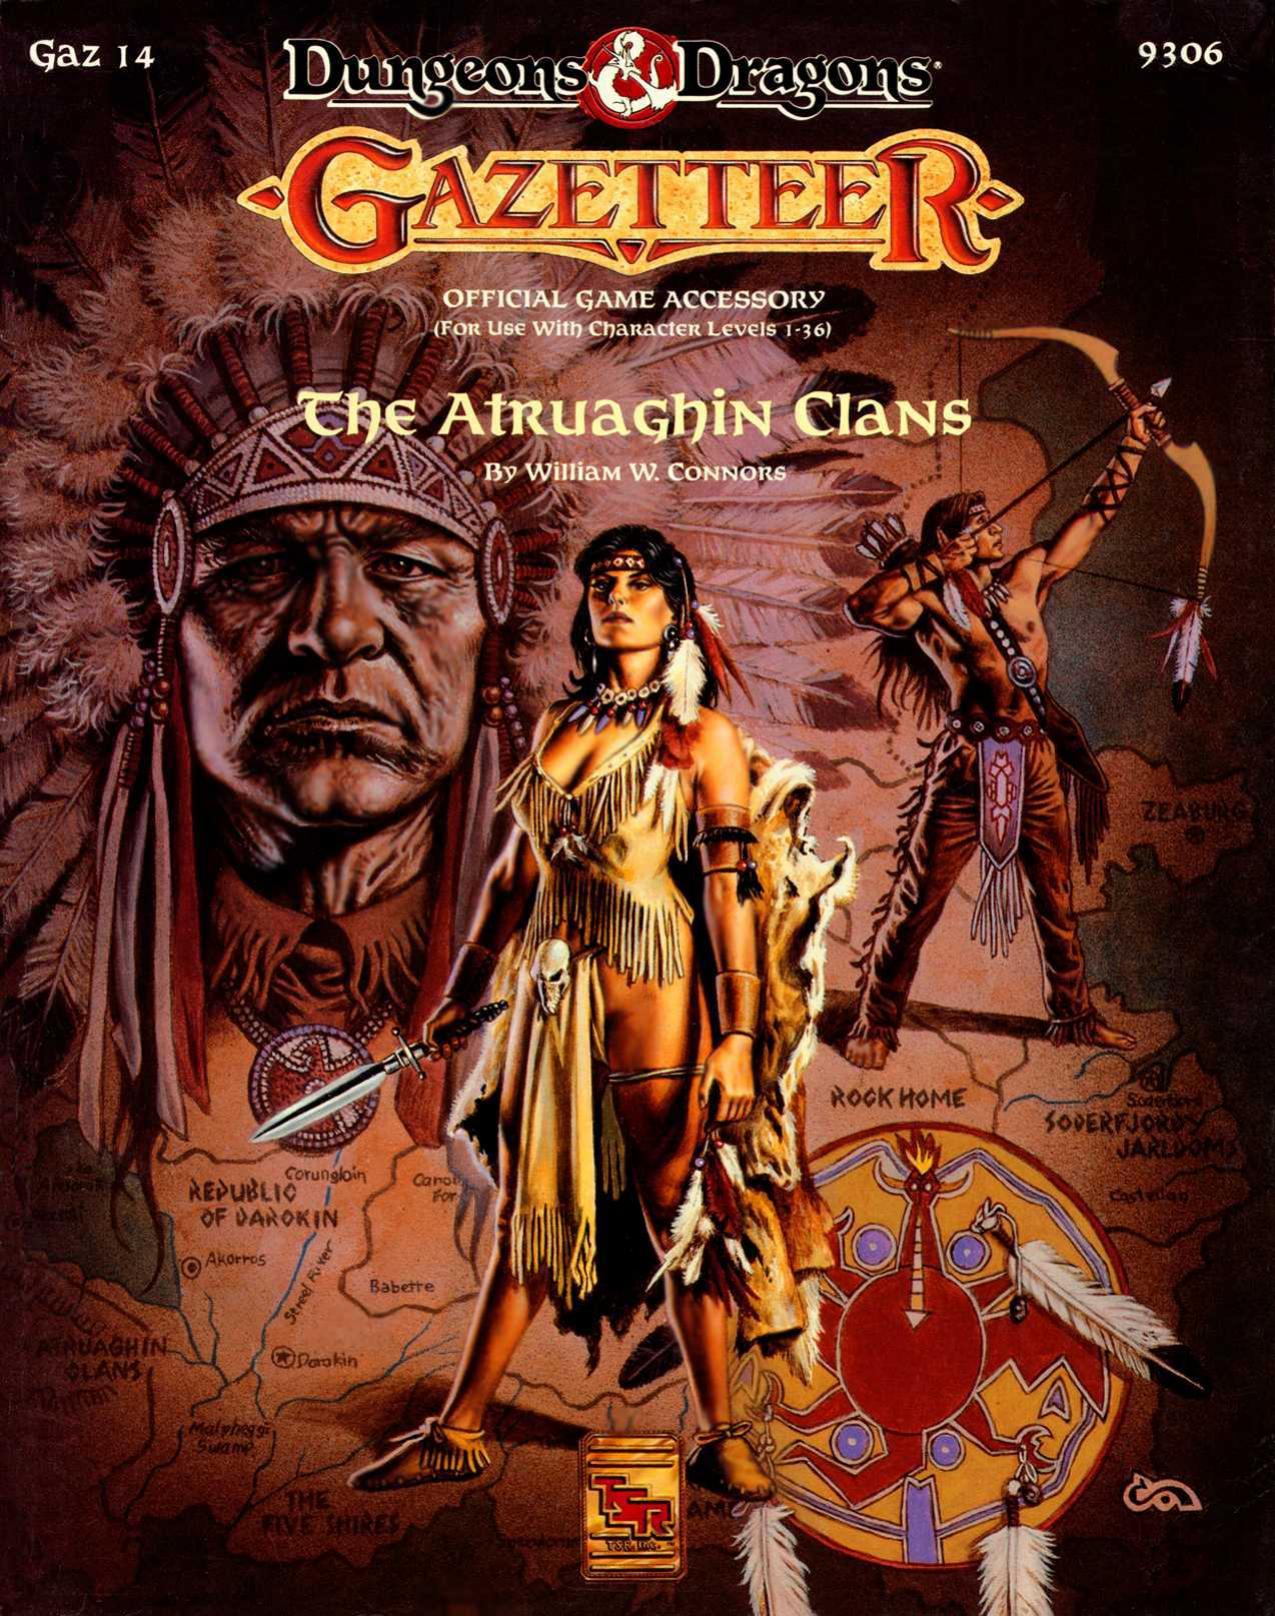 The Atruaghin Clans